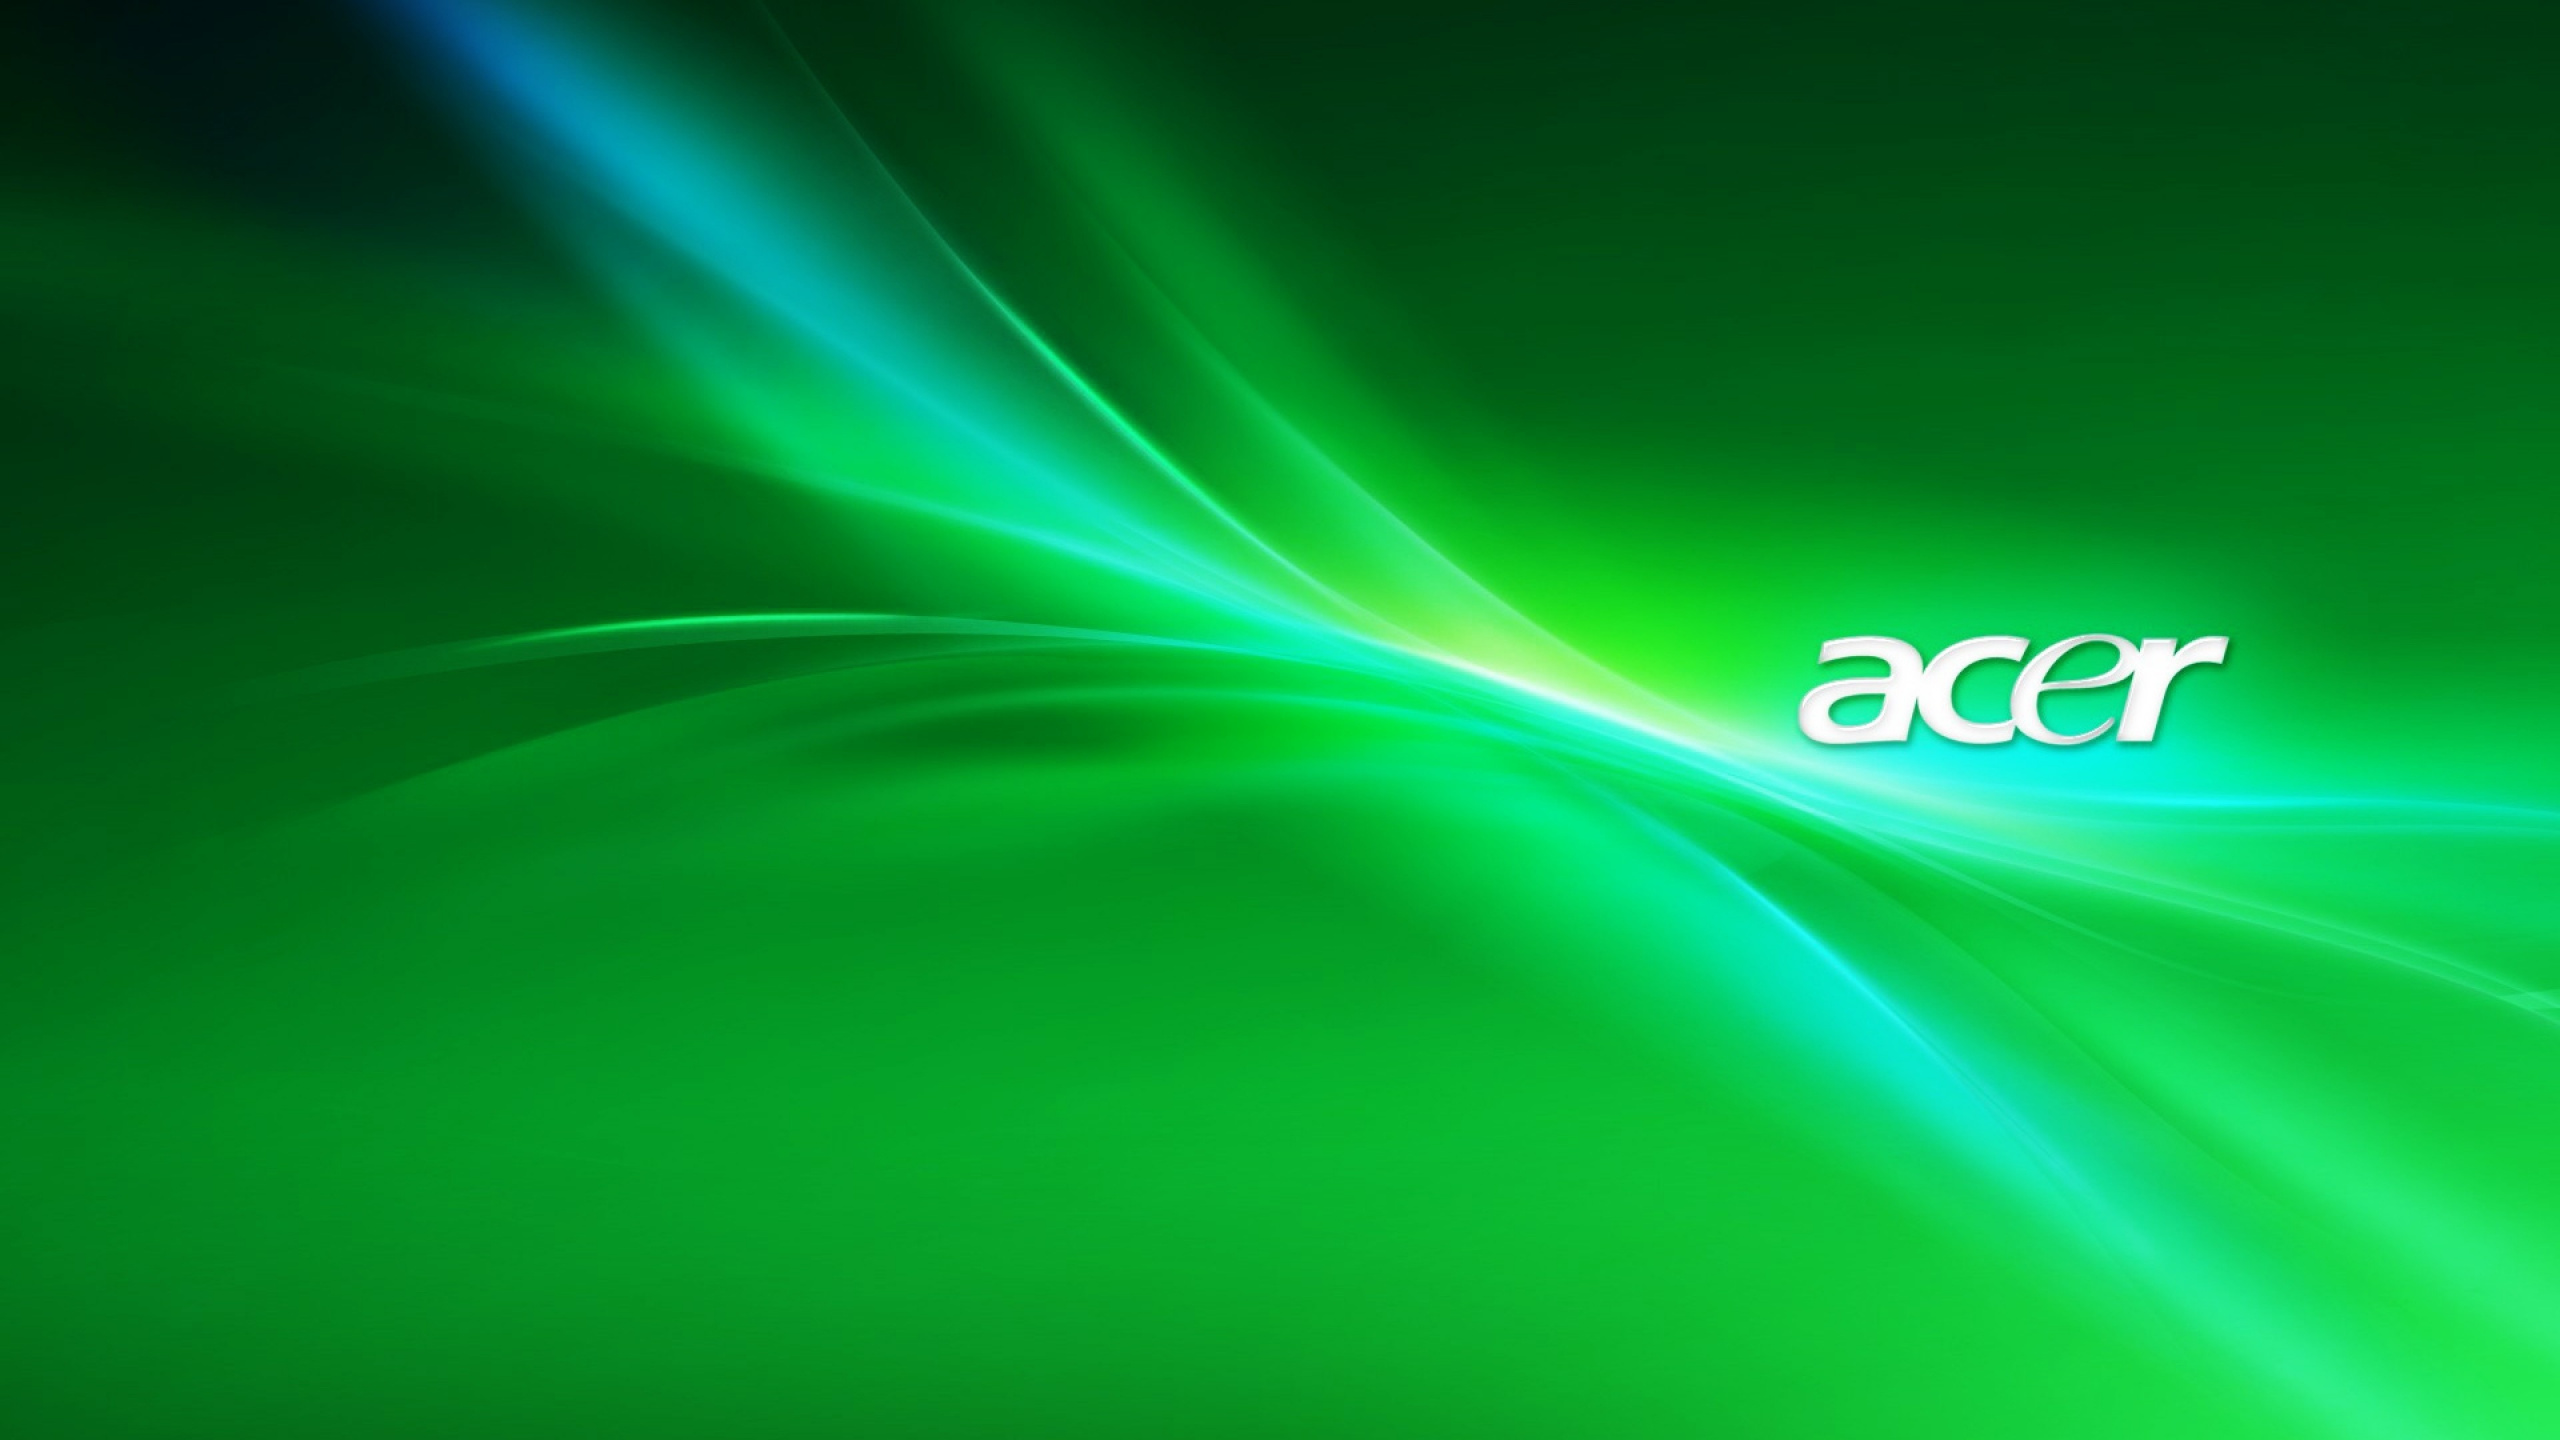 Acer, Windows 10, Verde, Luz, Gráficos. Wallpaper in 2560x1440 Resolution